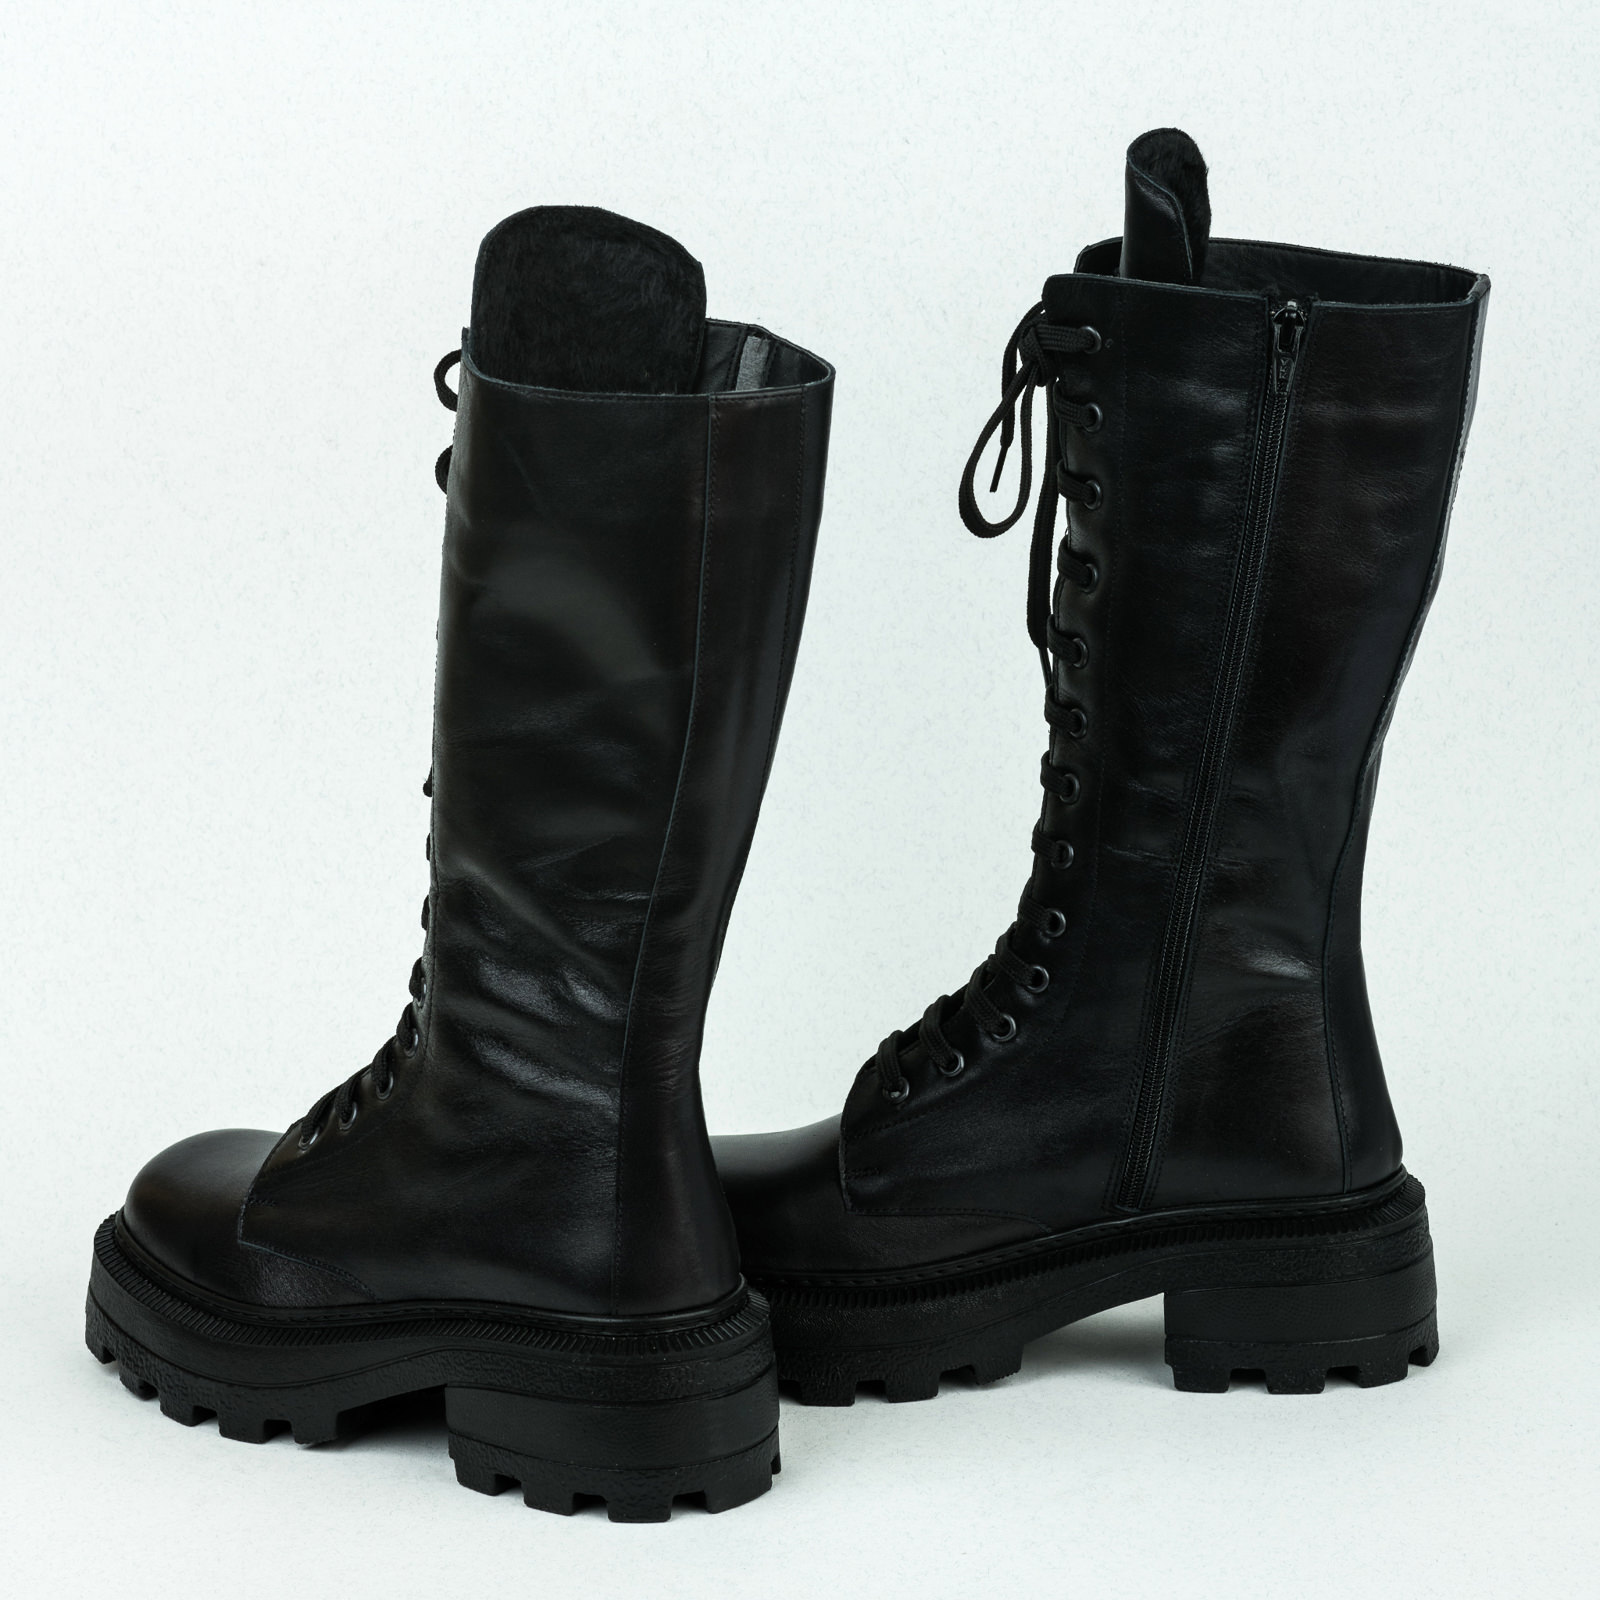 Leather WATERPROOF boots B090 - BLACK